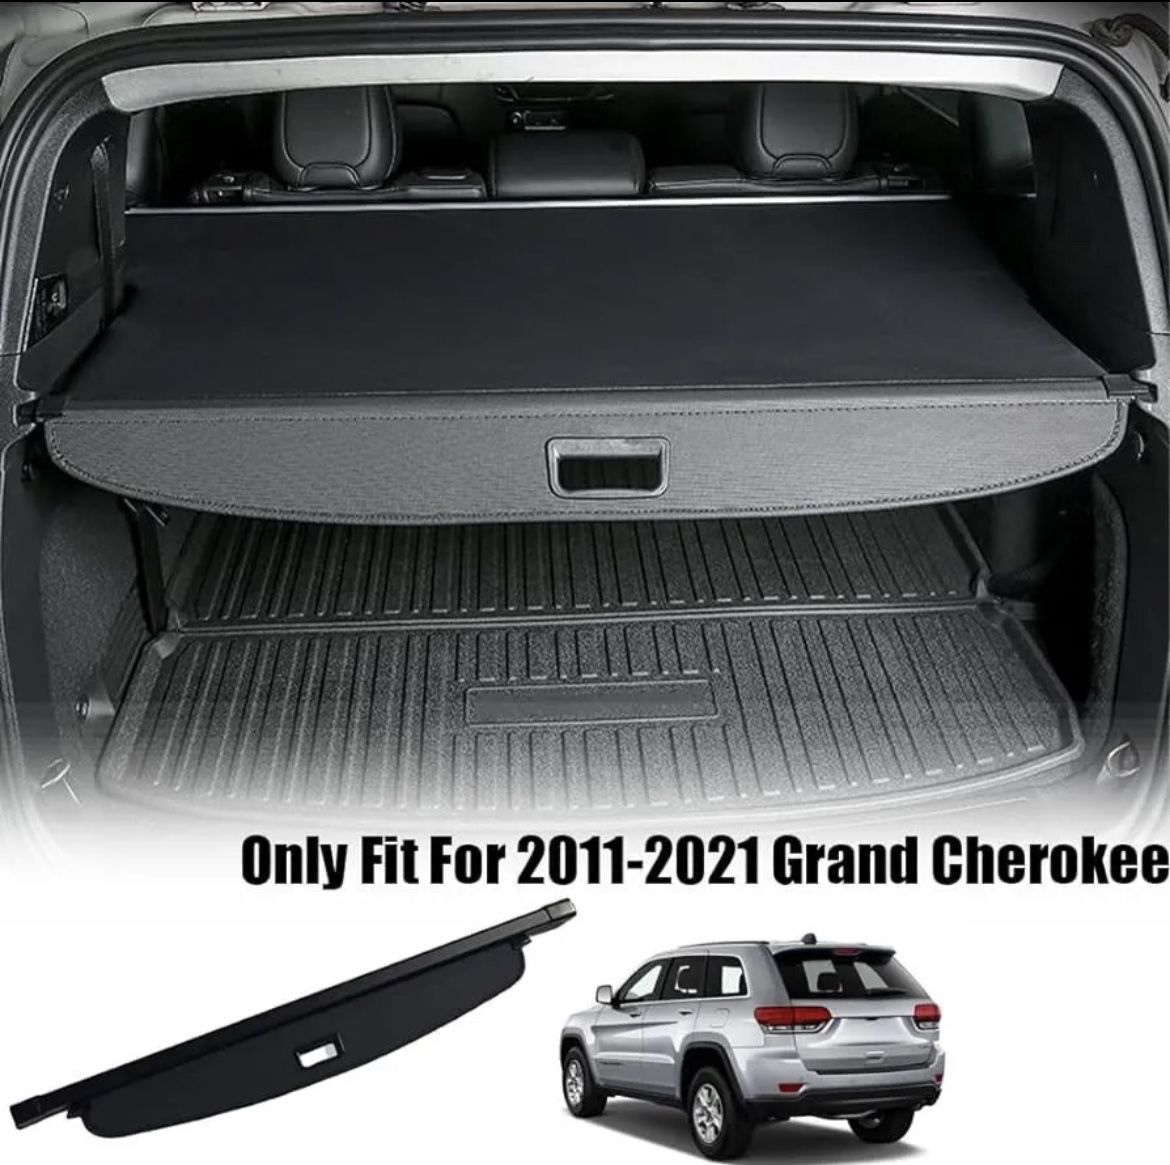 Jeep Grand Cherokee Trunk Cover Privacy Shade & Cargo Net OEM Mopar 2011-2021